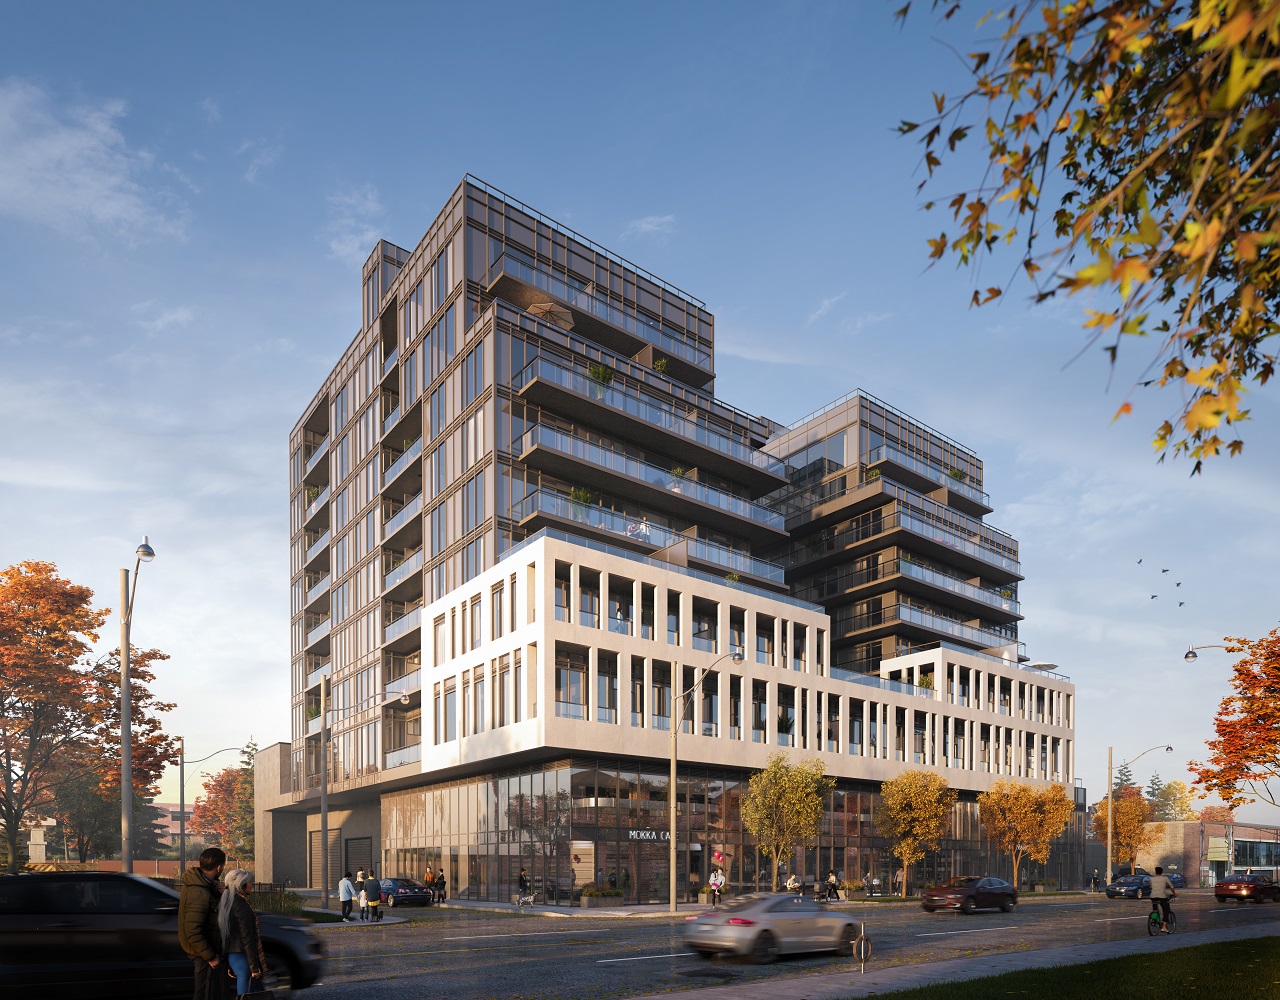 Oscar Residences, Lifetime Developments, Mason Studio, Turner Fleischer Architects, Toronto